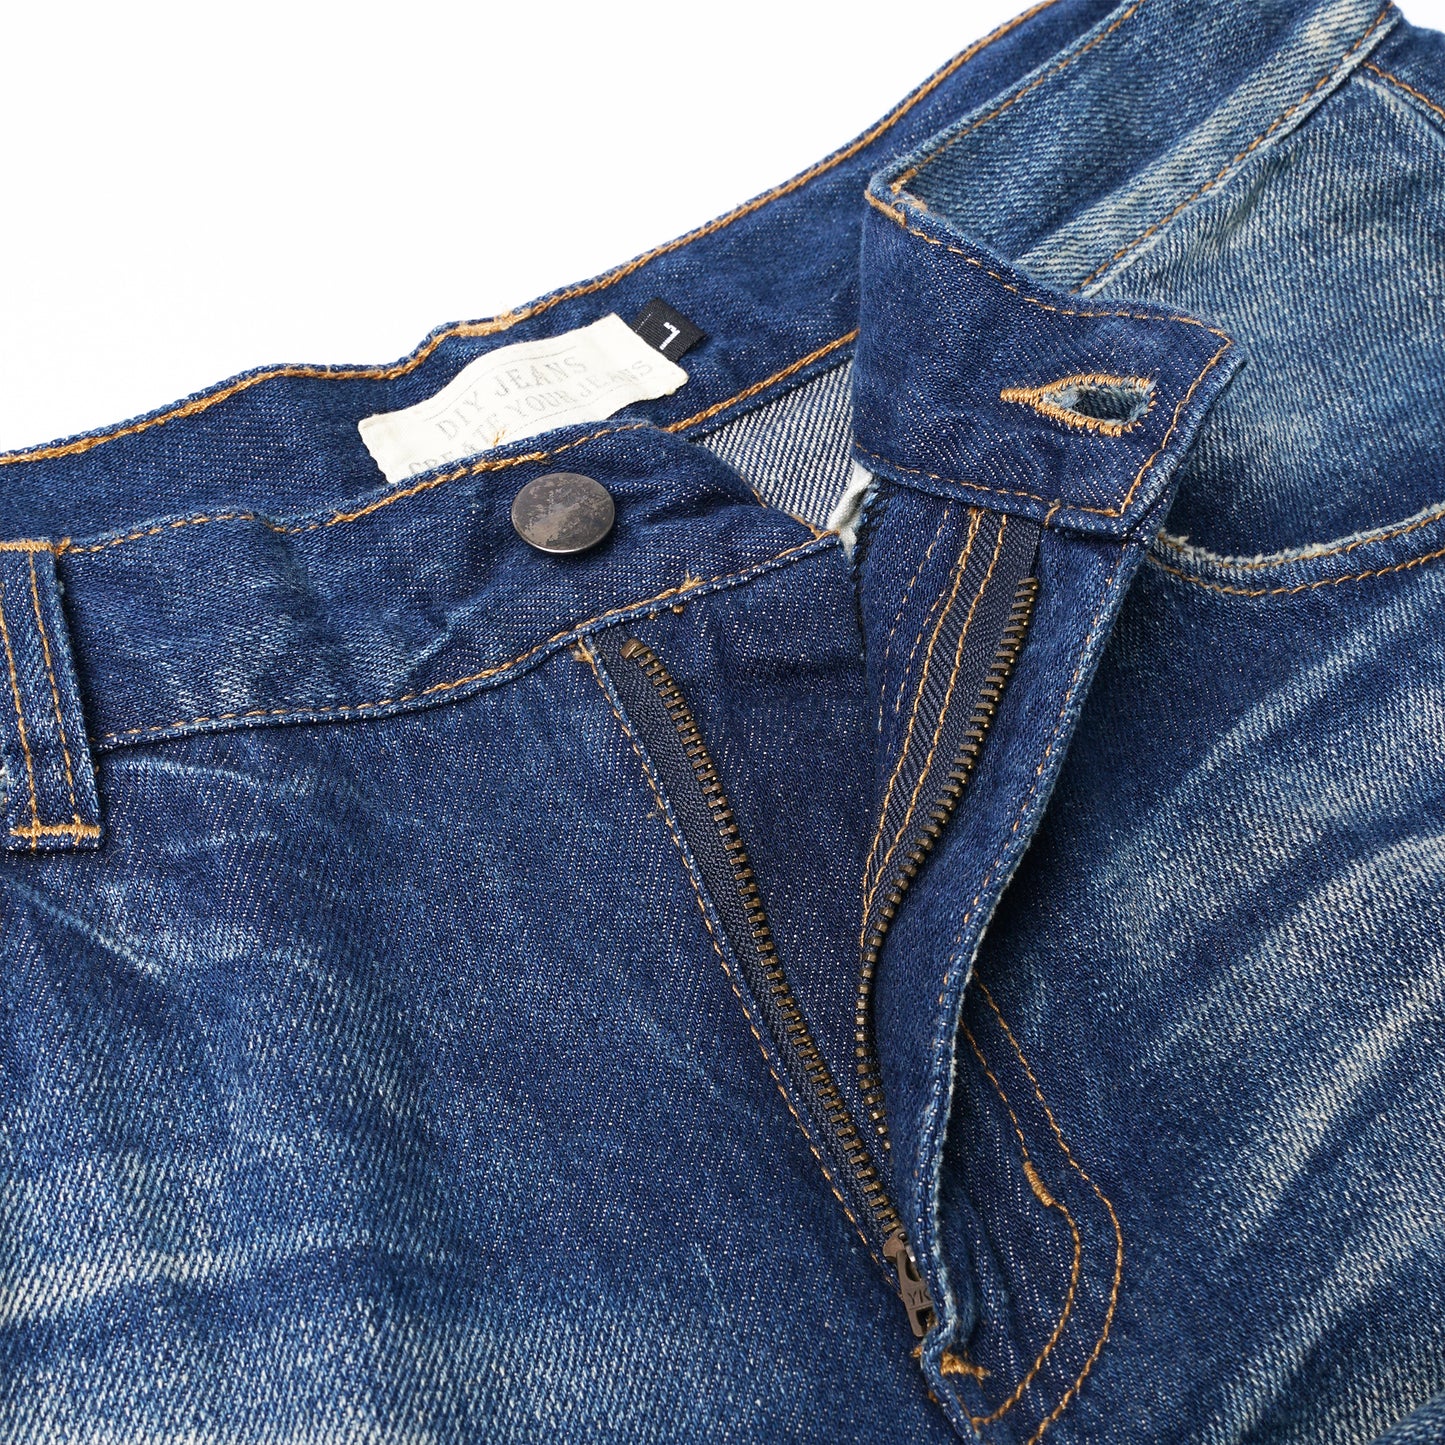 【Custom】No.1 13oz. Dirty Washed Damaged Jeans